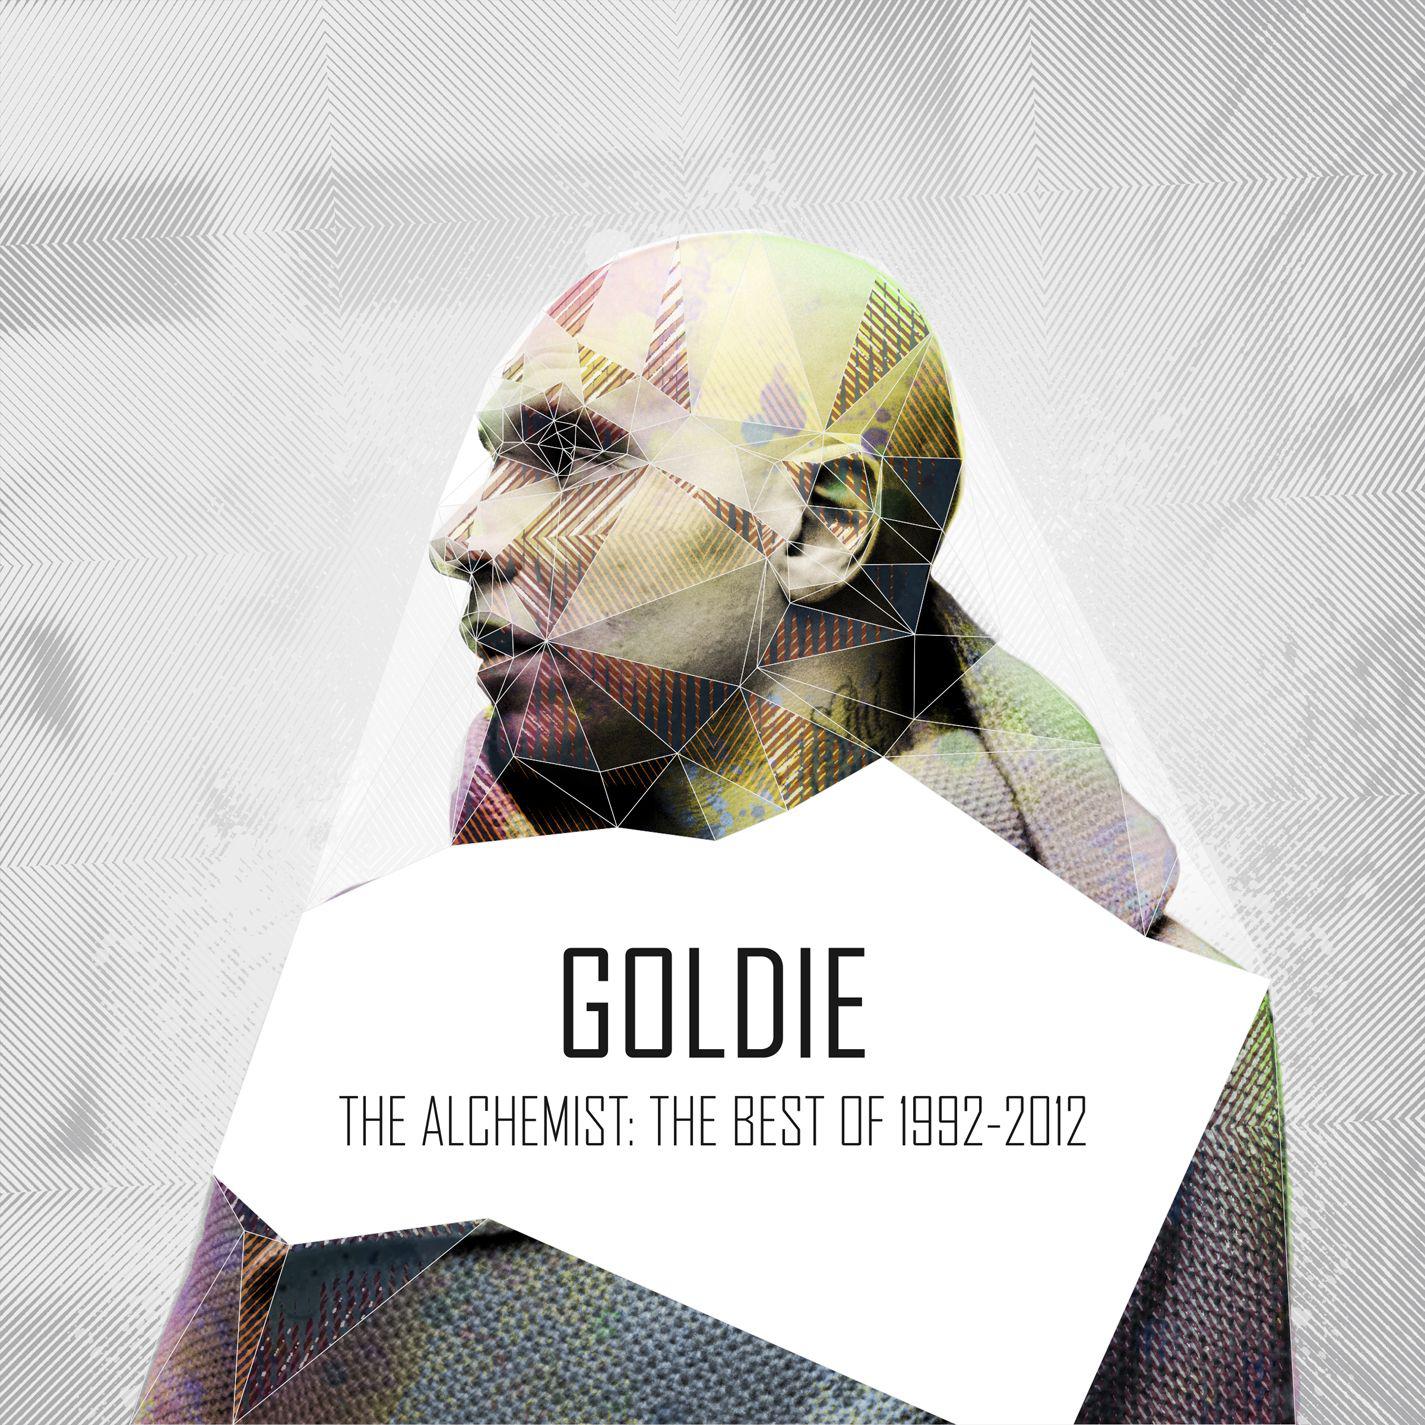 2012 1992. The Alchemist the best of 1992-2012. Inner City Life Goldie. Goldie Jungle обложки альбомов. Goldie диджей.